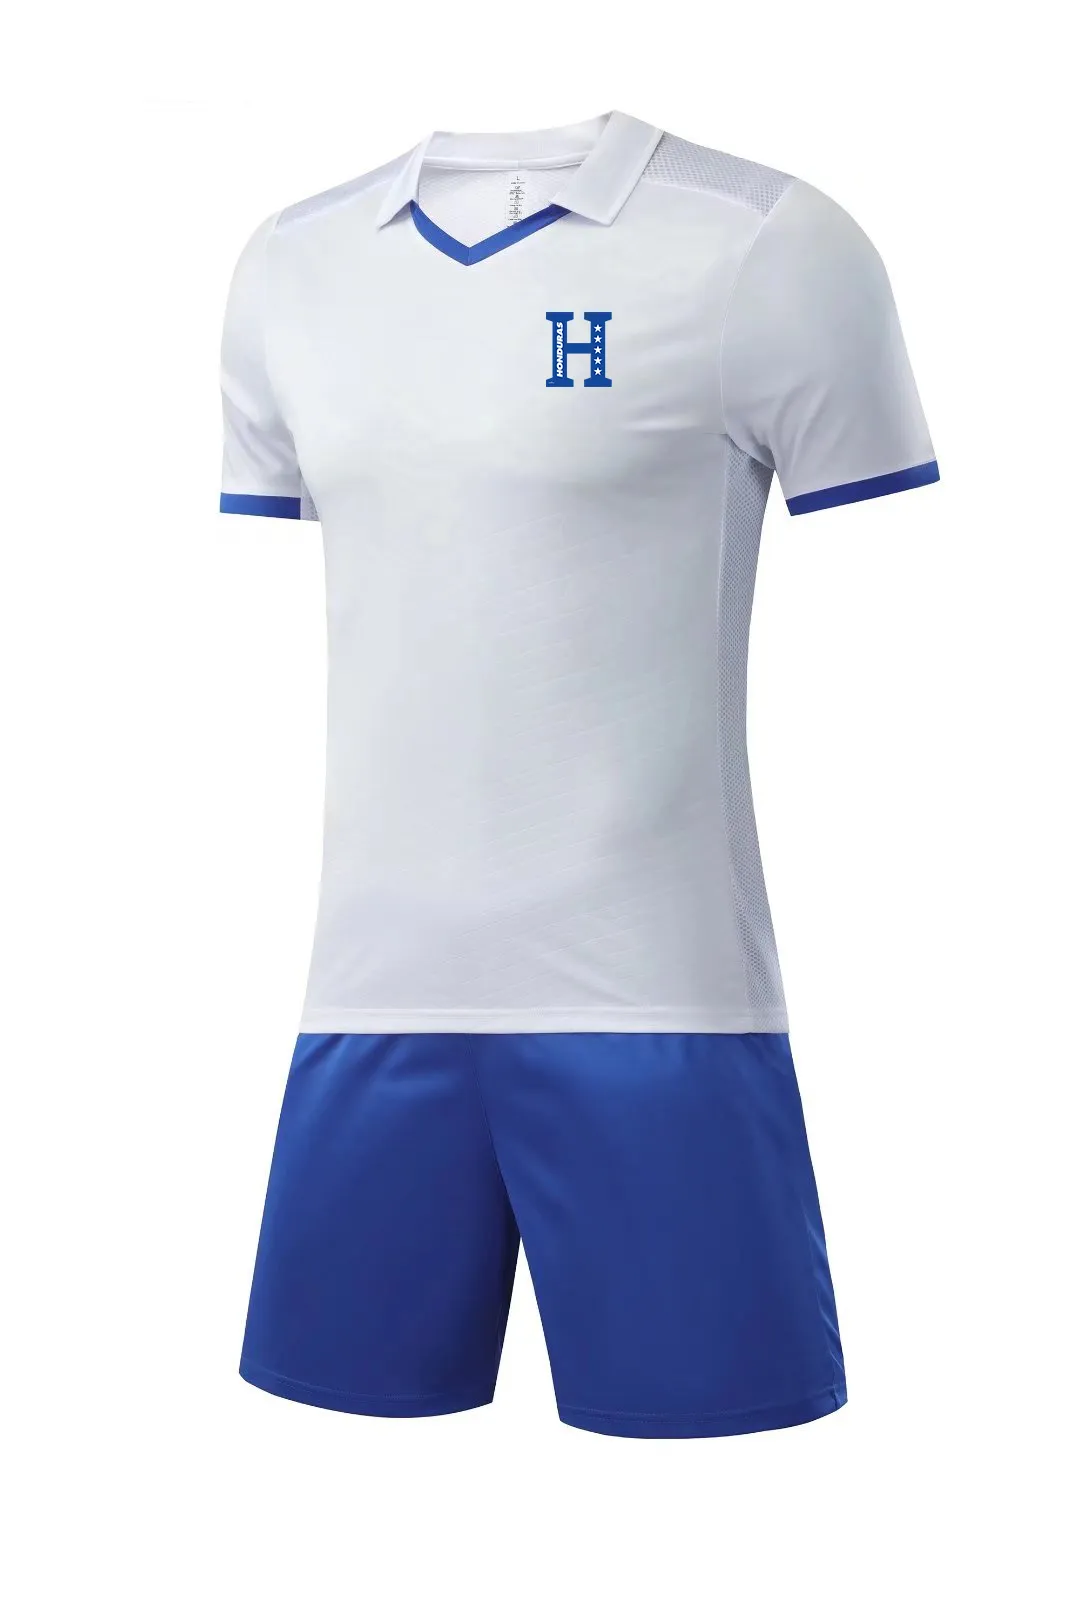 Honduras Herren-Trainingsanzüge, Revers-Sportanzug, atmungsaktives Training, cooles Outdoor-Freizeitsport-Kurzarmshirt aus Mesh auf der Rückseite